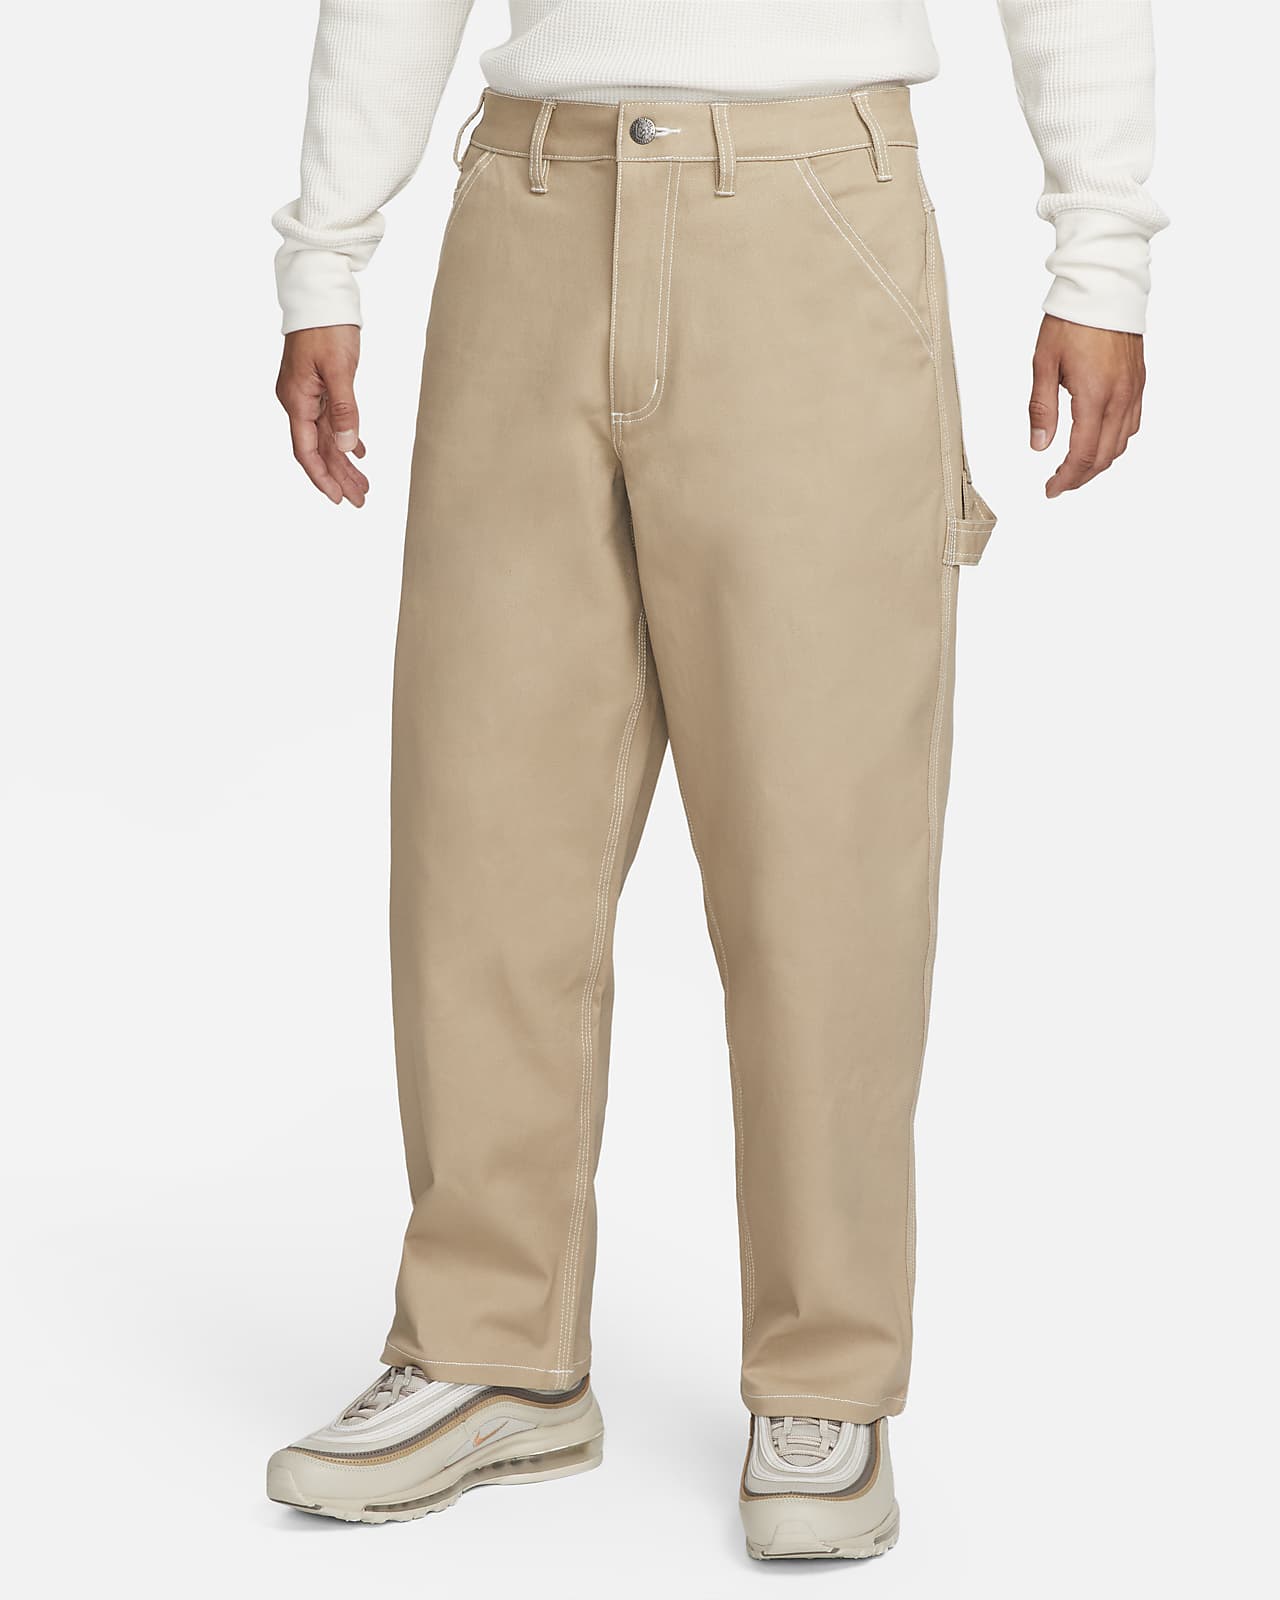 Nike Life Men's Carpenter Trousers